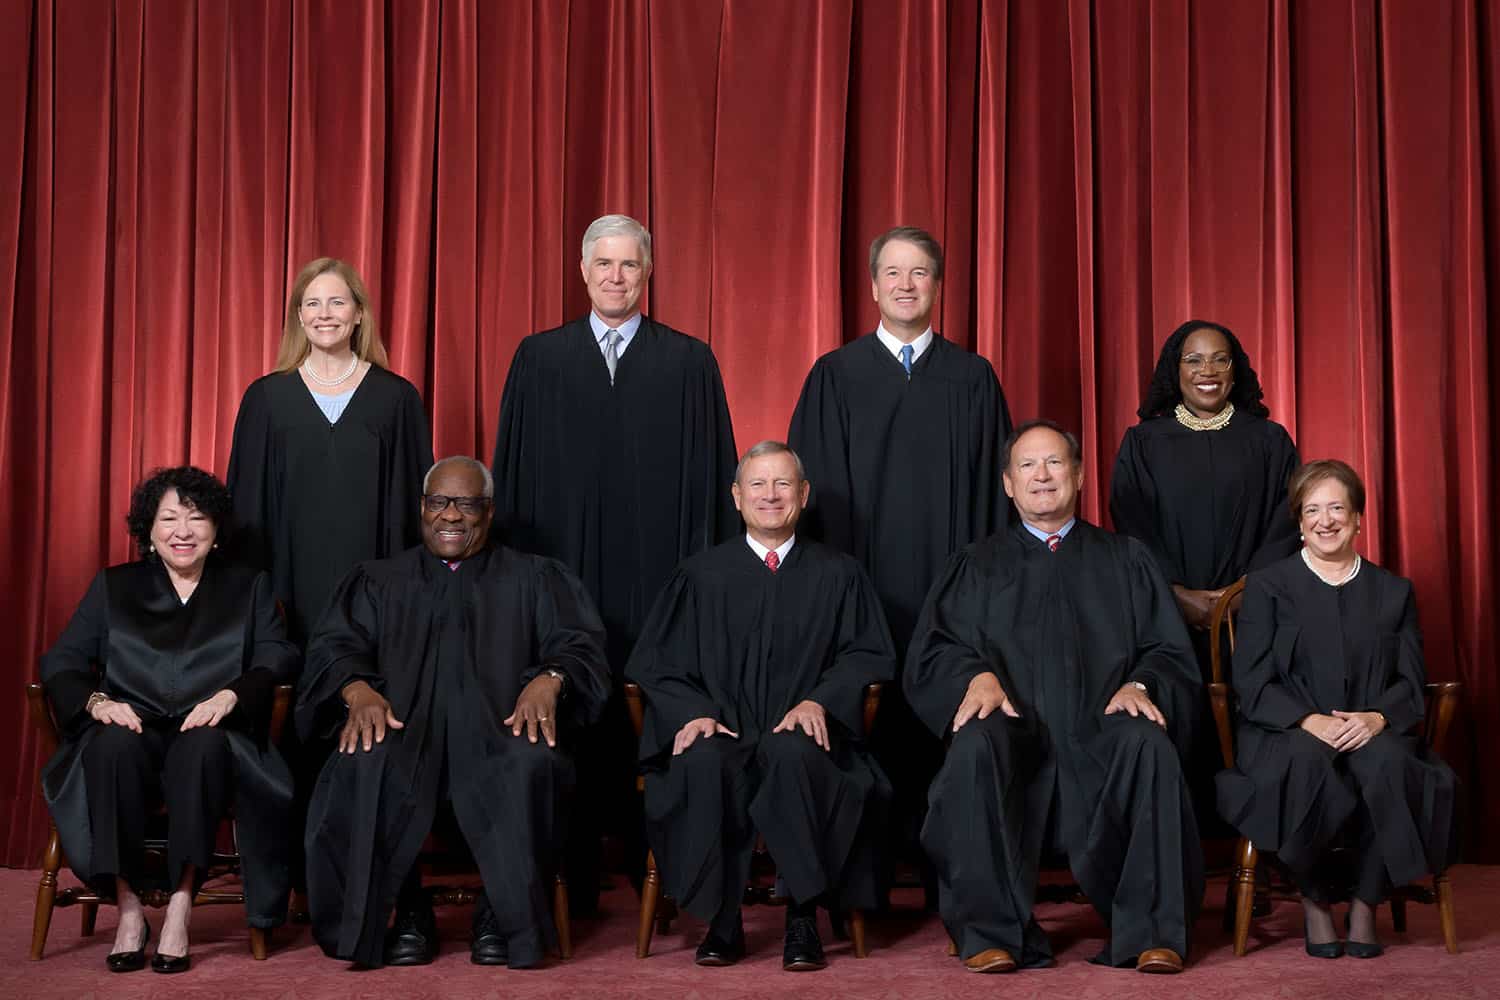 The Supreme Court Needs Reform, Ethics